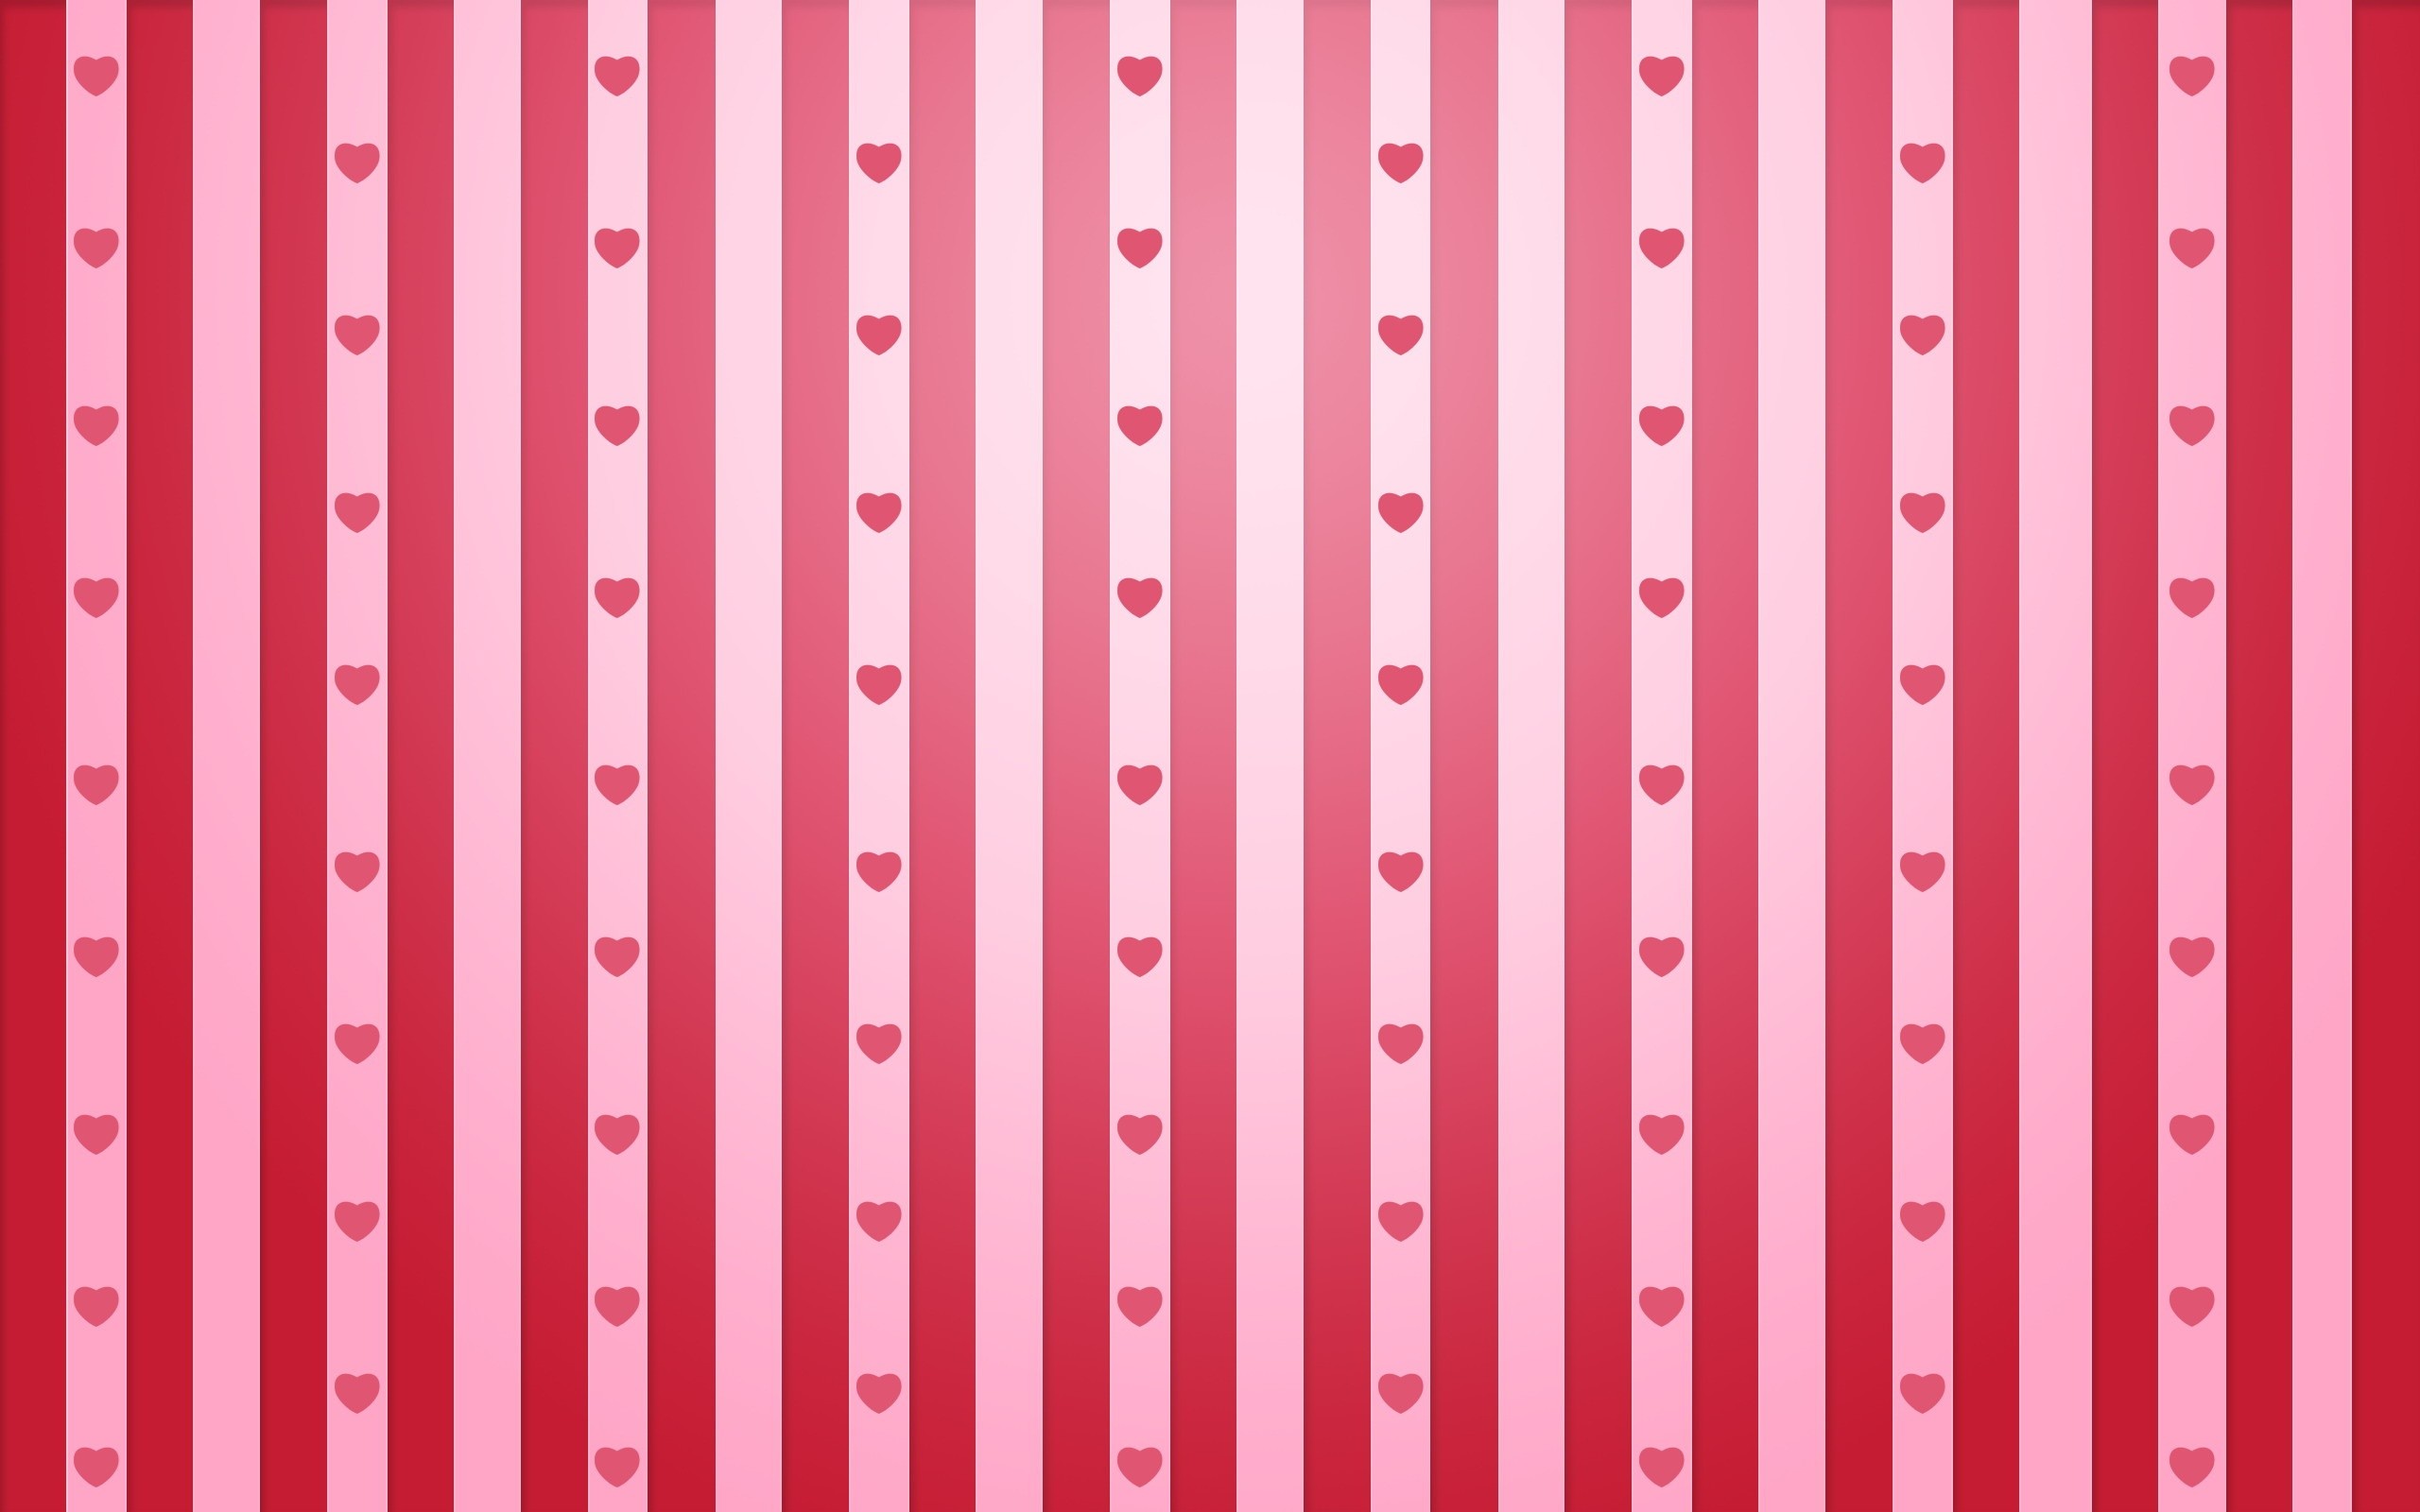 General 2560x1600 lines Valentine's Day texture heart (design) love digital art